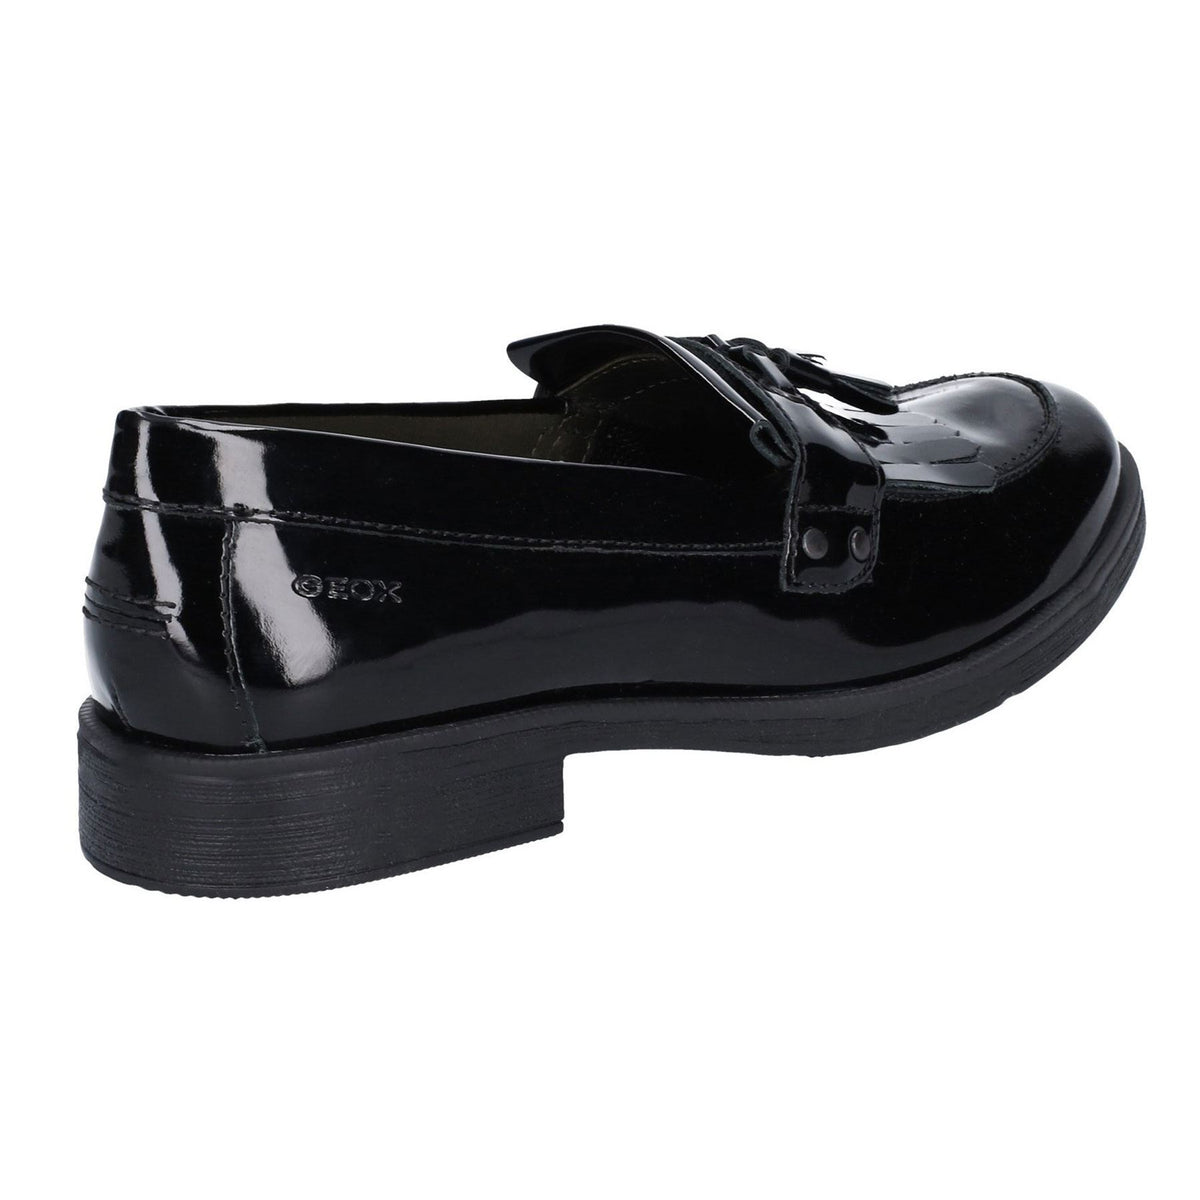 Geox Girls School Patent Slip On J Agata Shoes